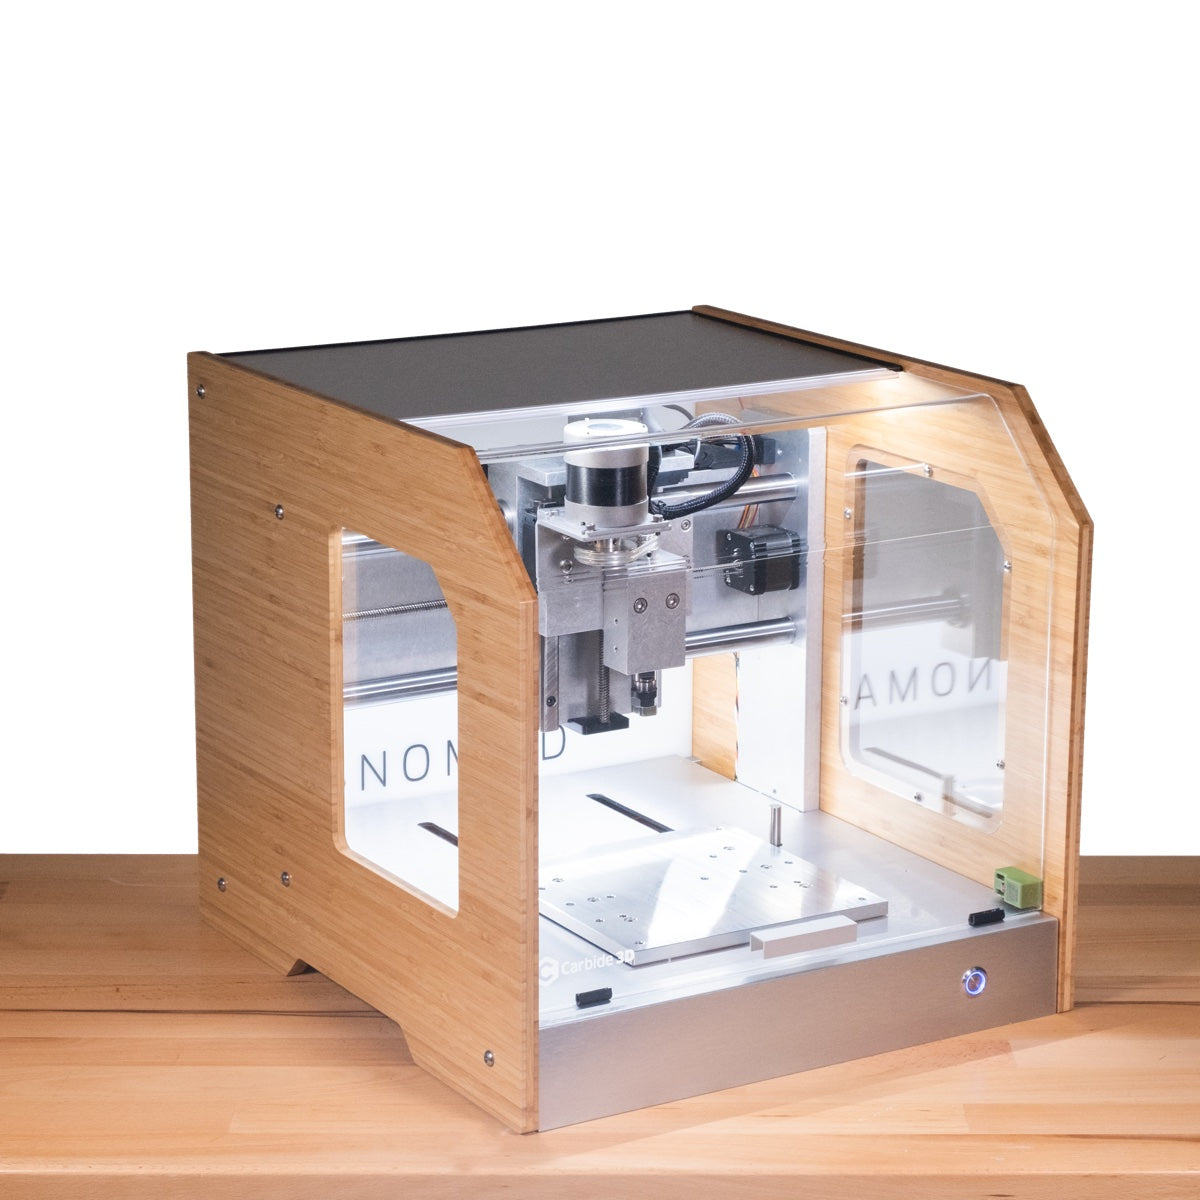 Nomad 3 - Desktop CNC Mill